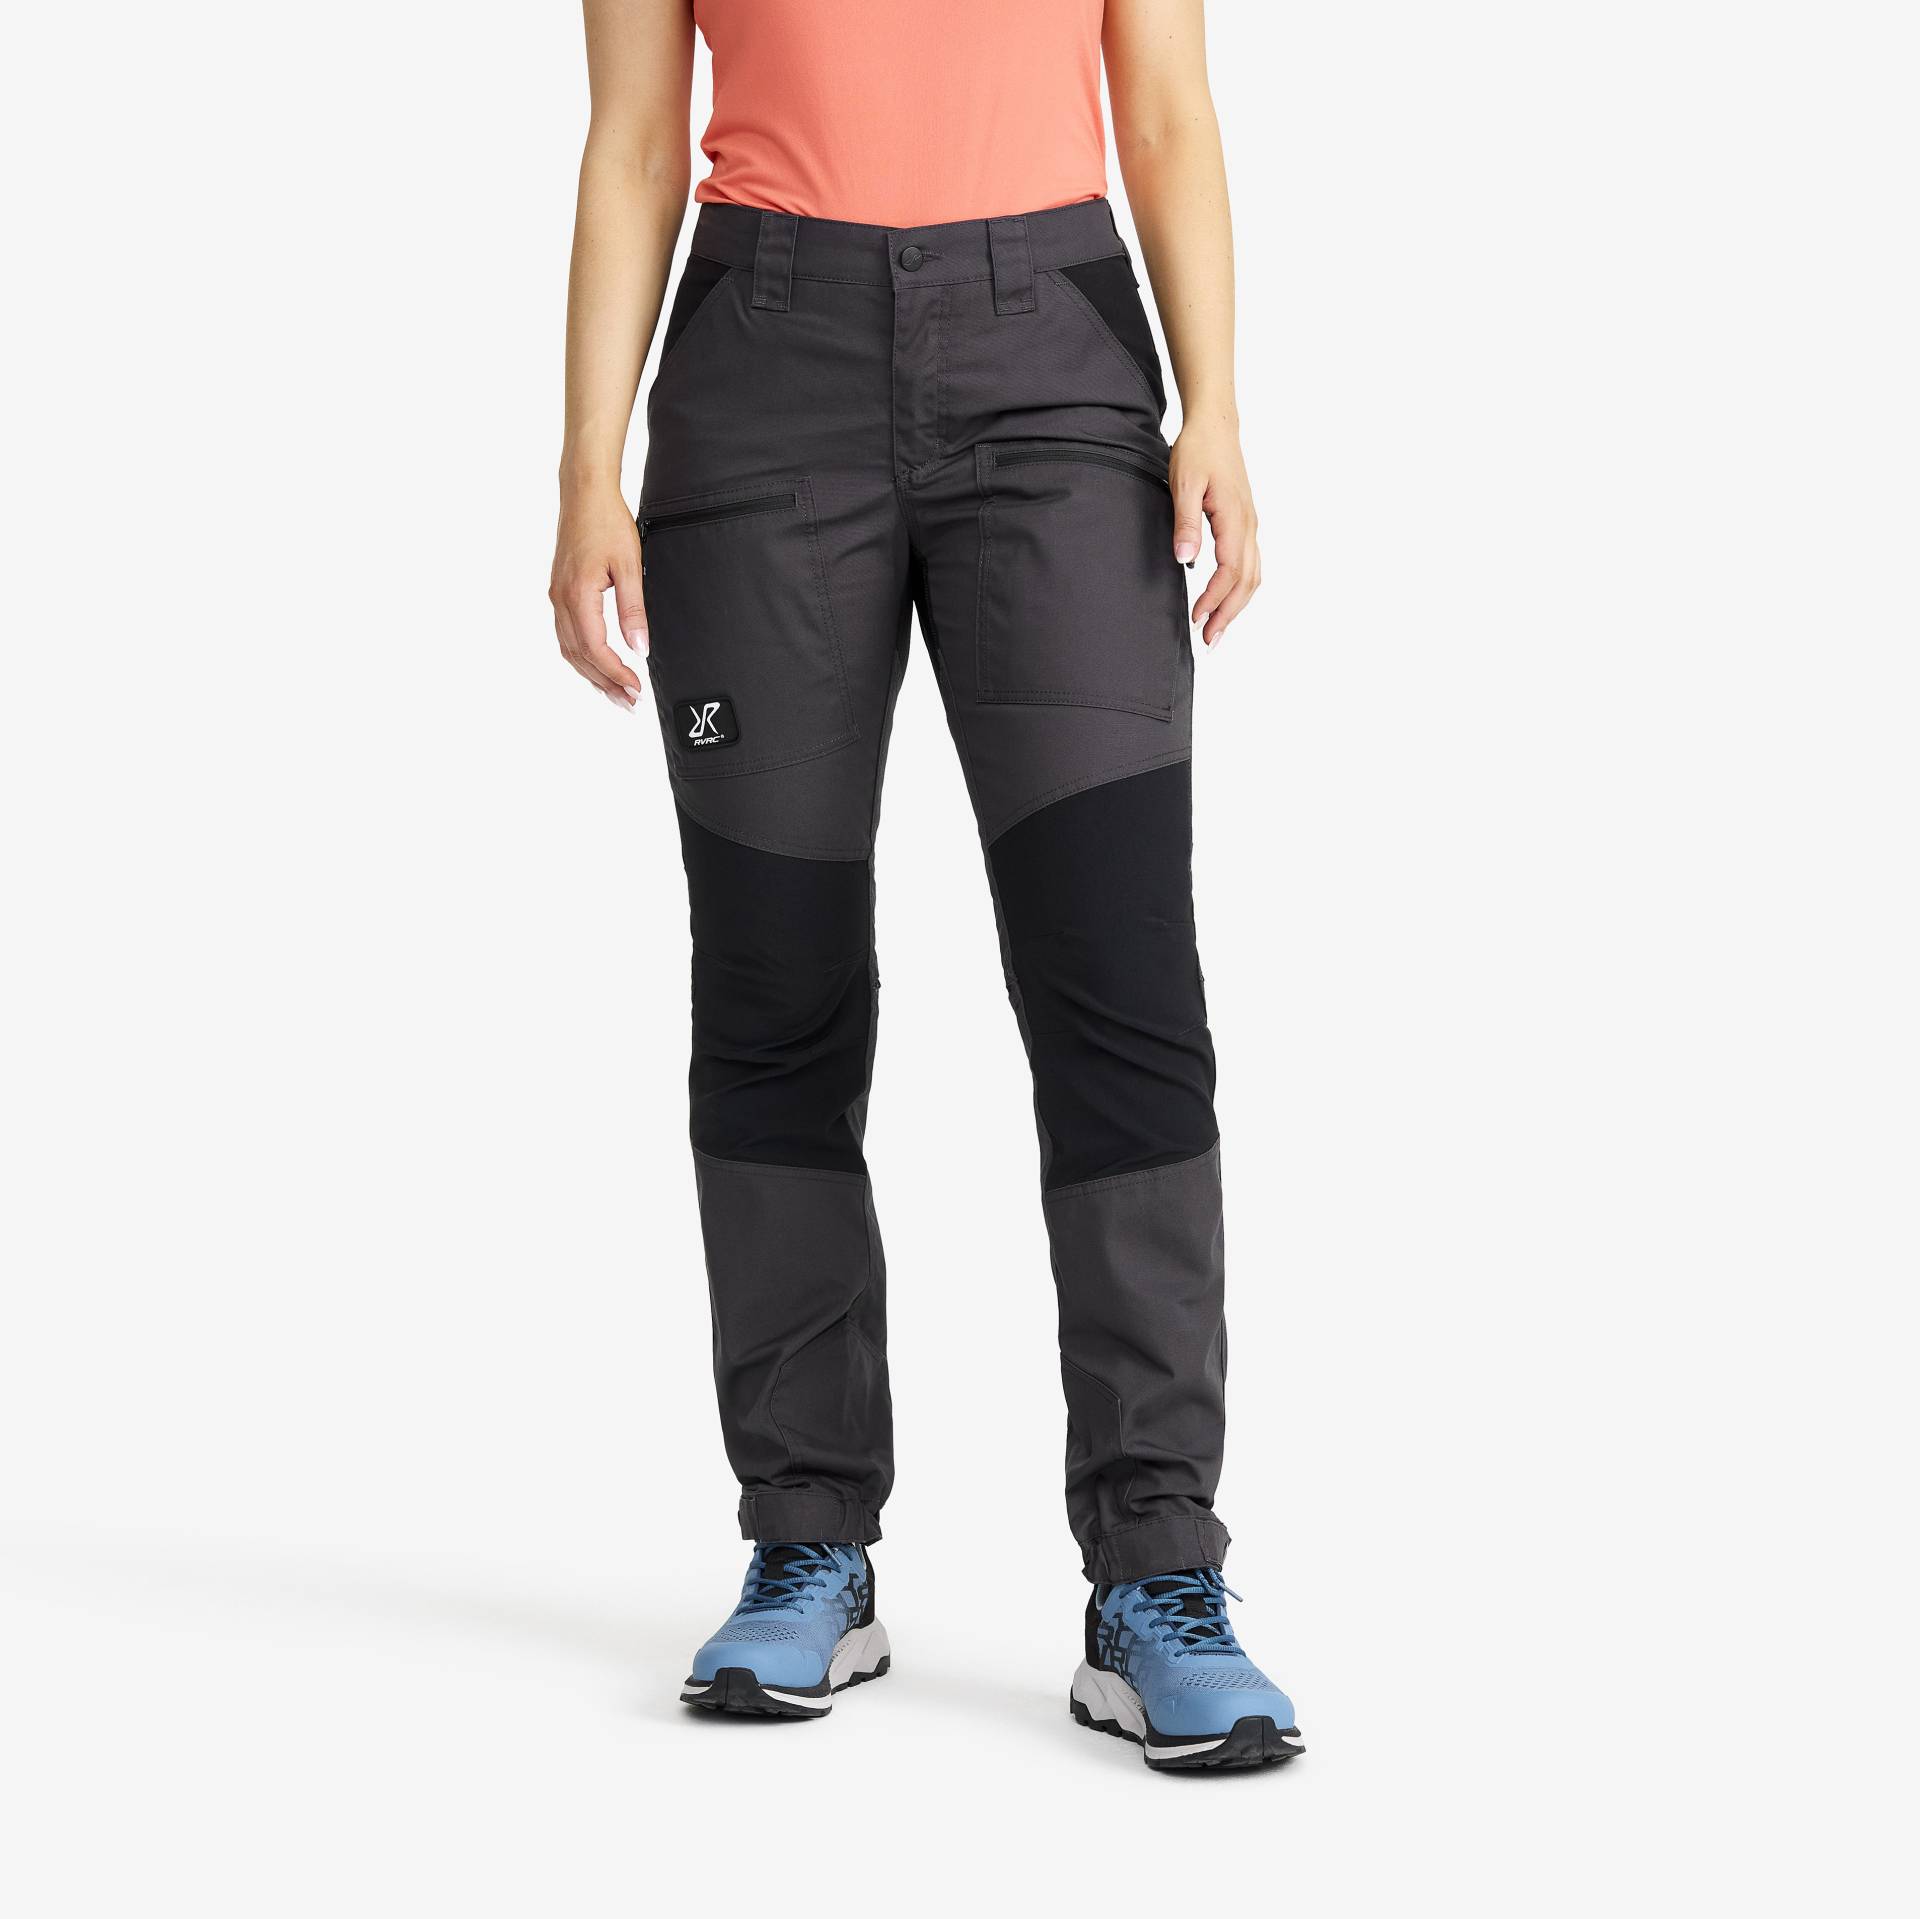 Nordwand Pro Pants Damen Anthracite, Größe:XS - Outdoorhose, Wanderhose & Trekkinghose von RevolutionRace